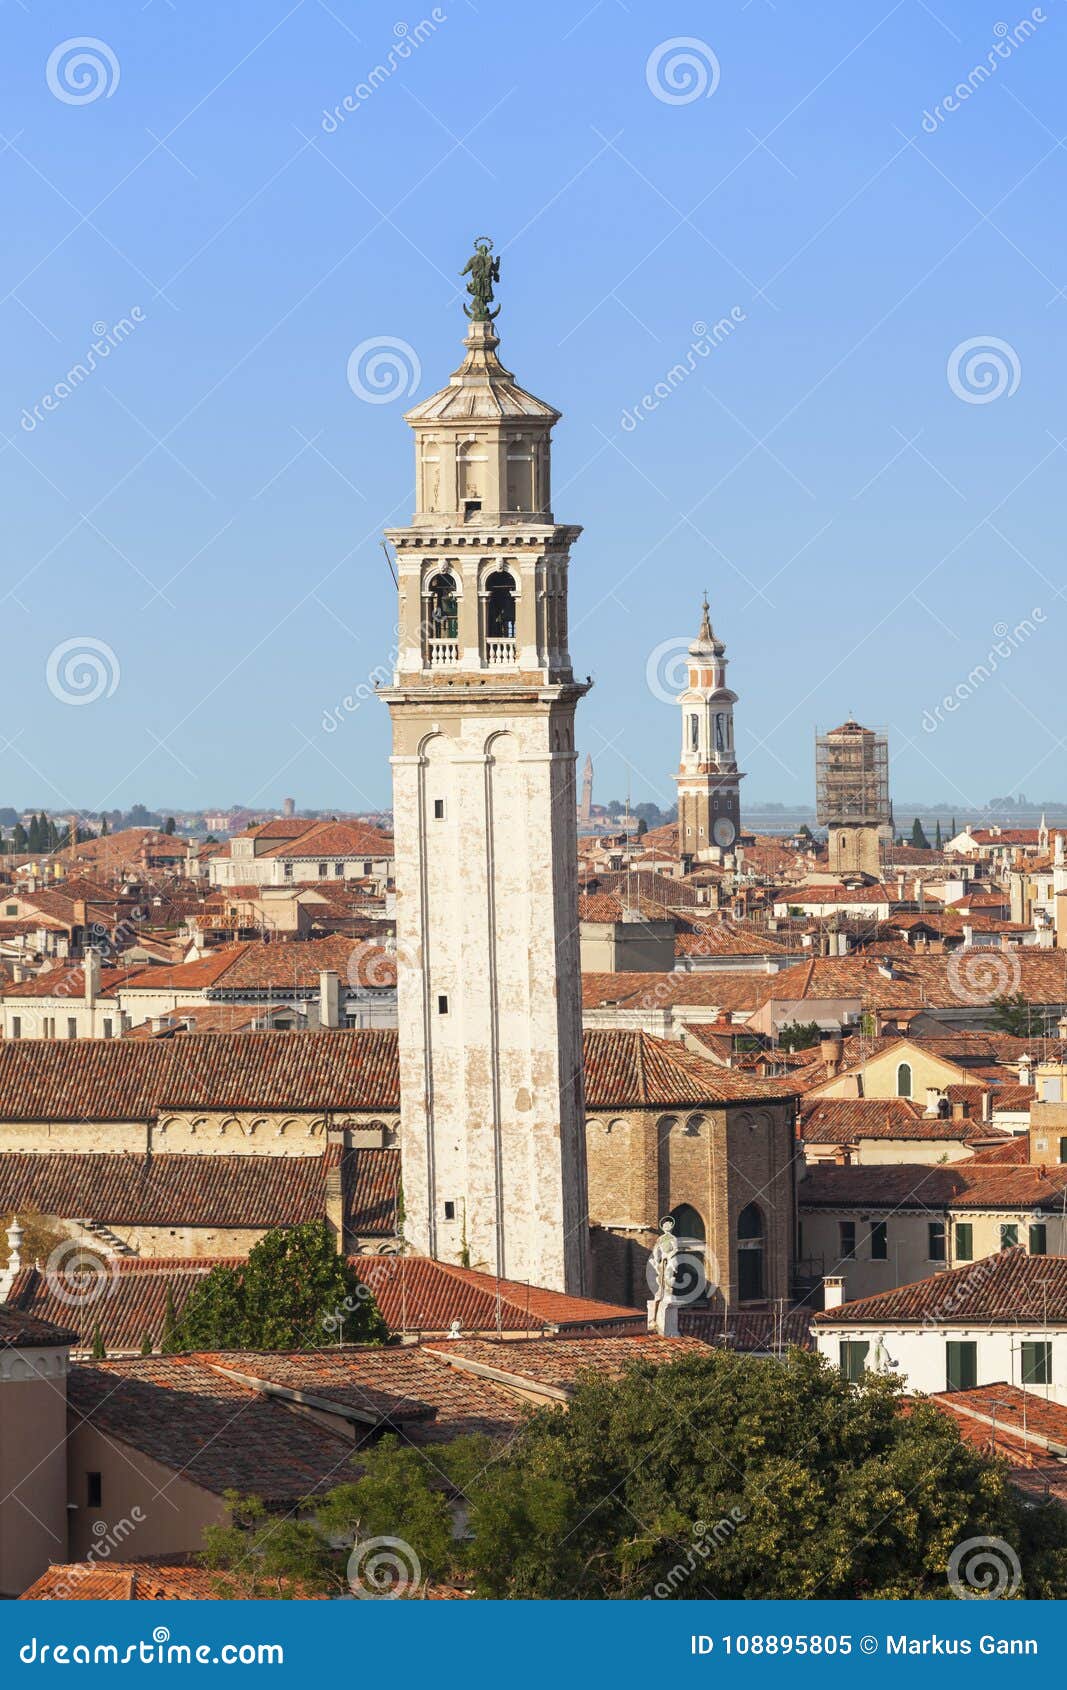 Ein Turm in Venedig Italien